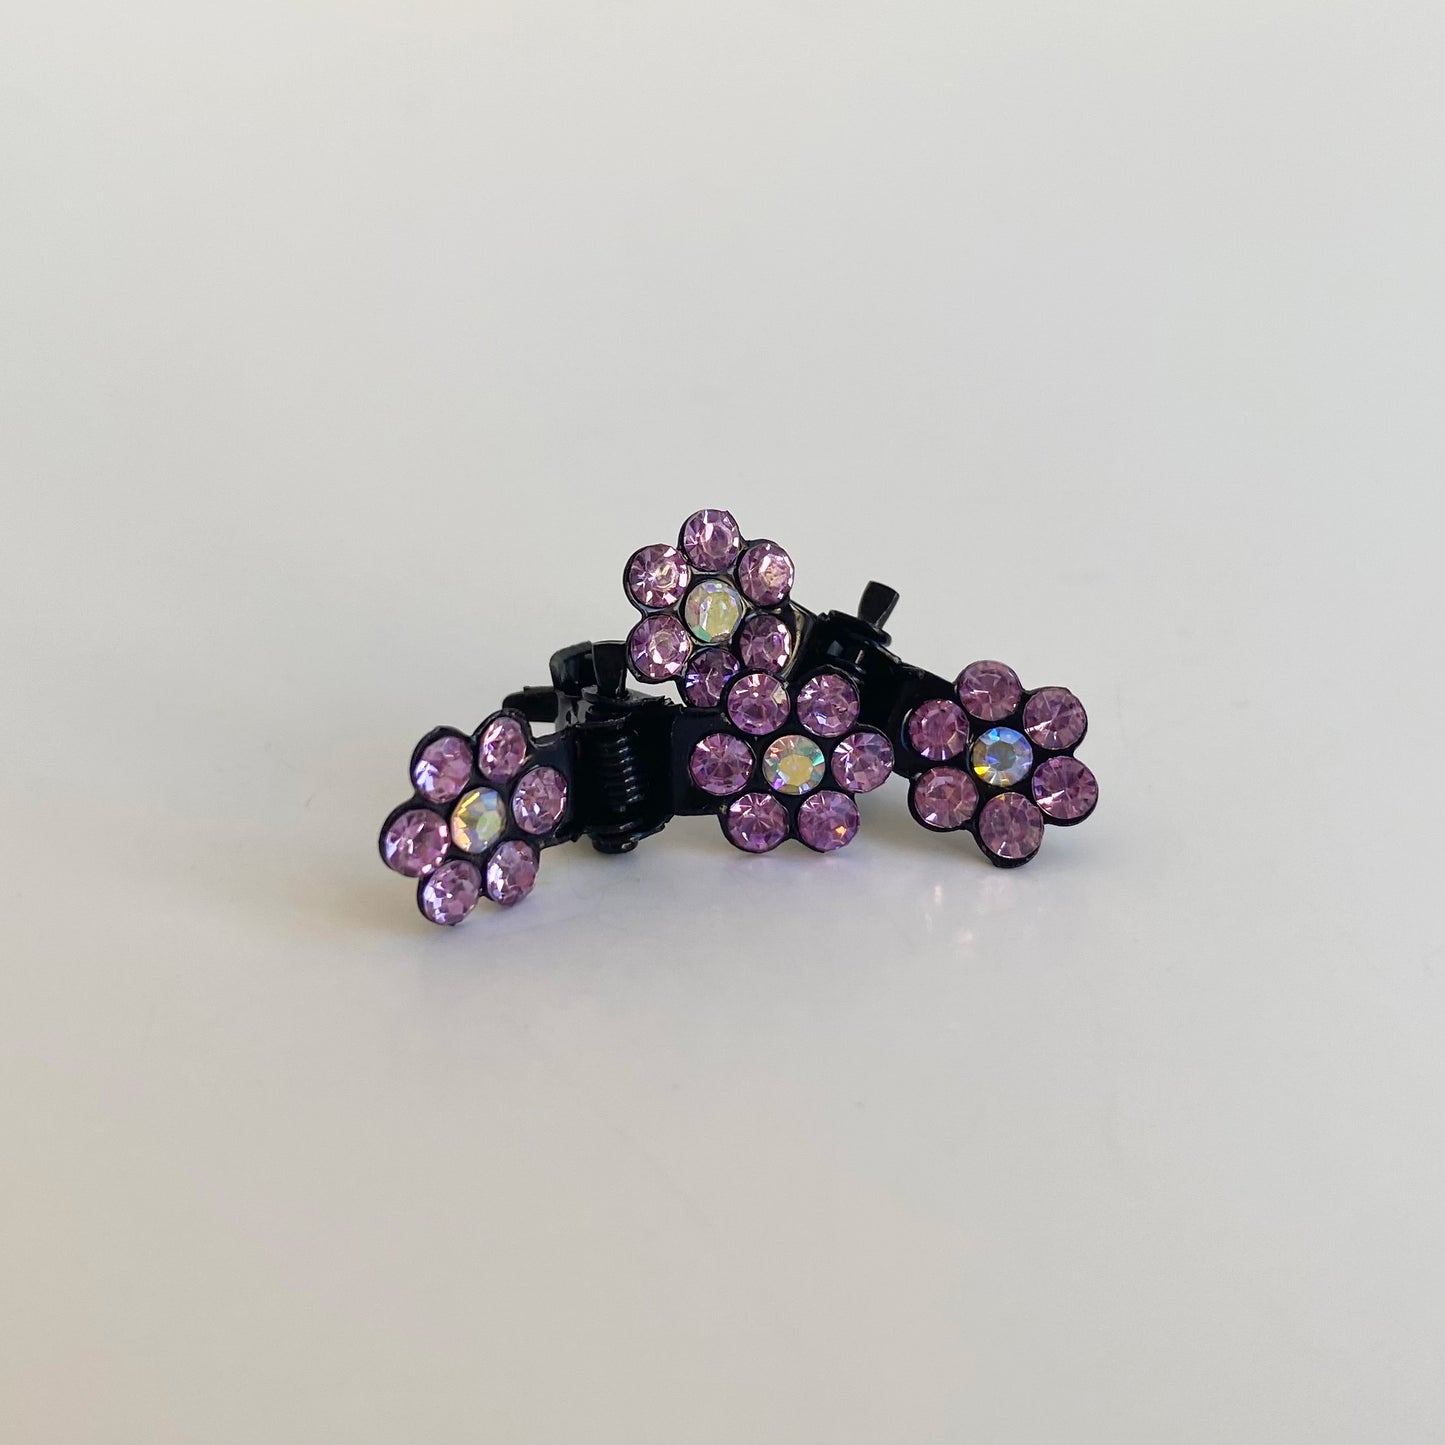 Small Rhinestone Flower Hair Clips  in purple